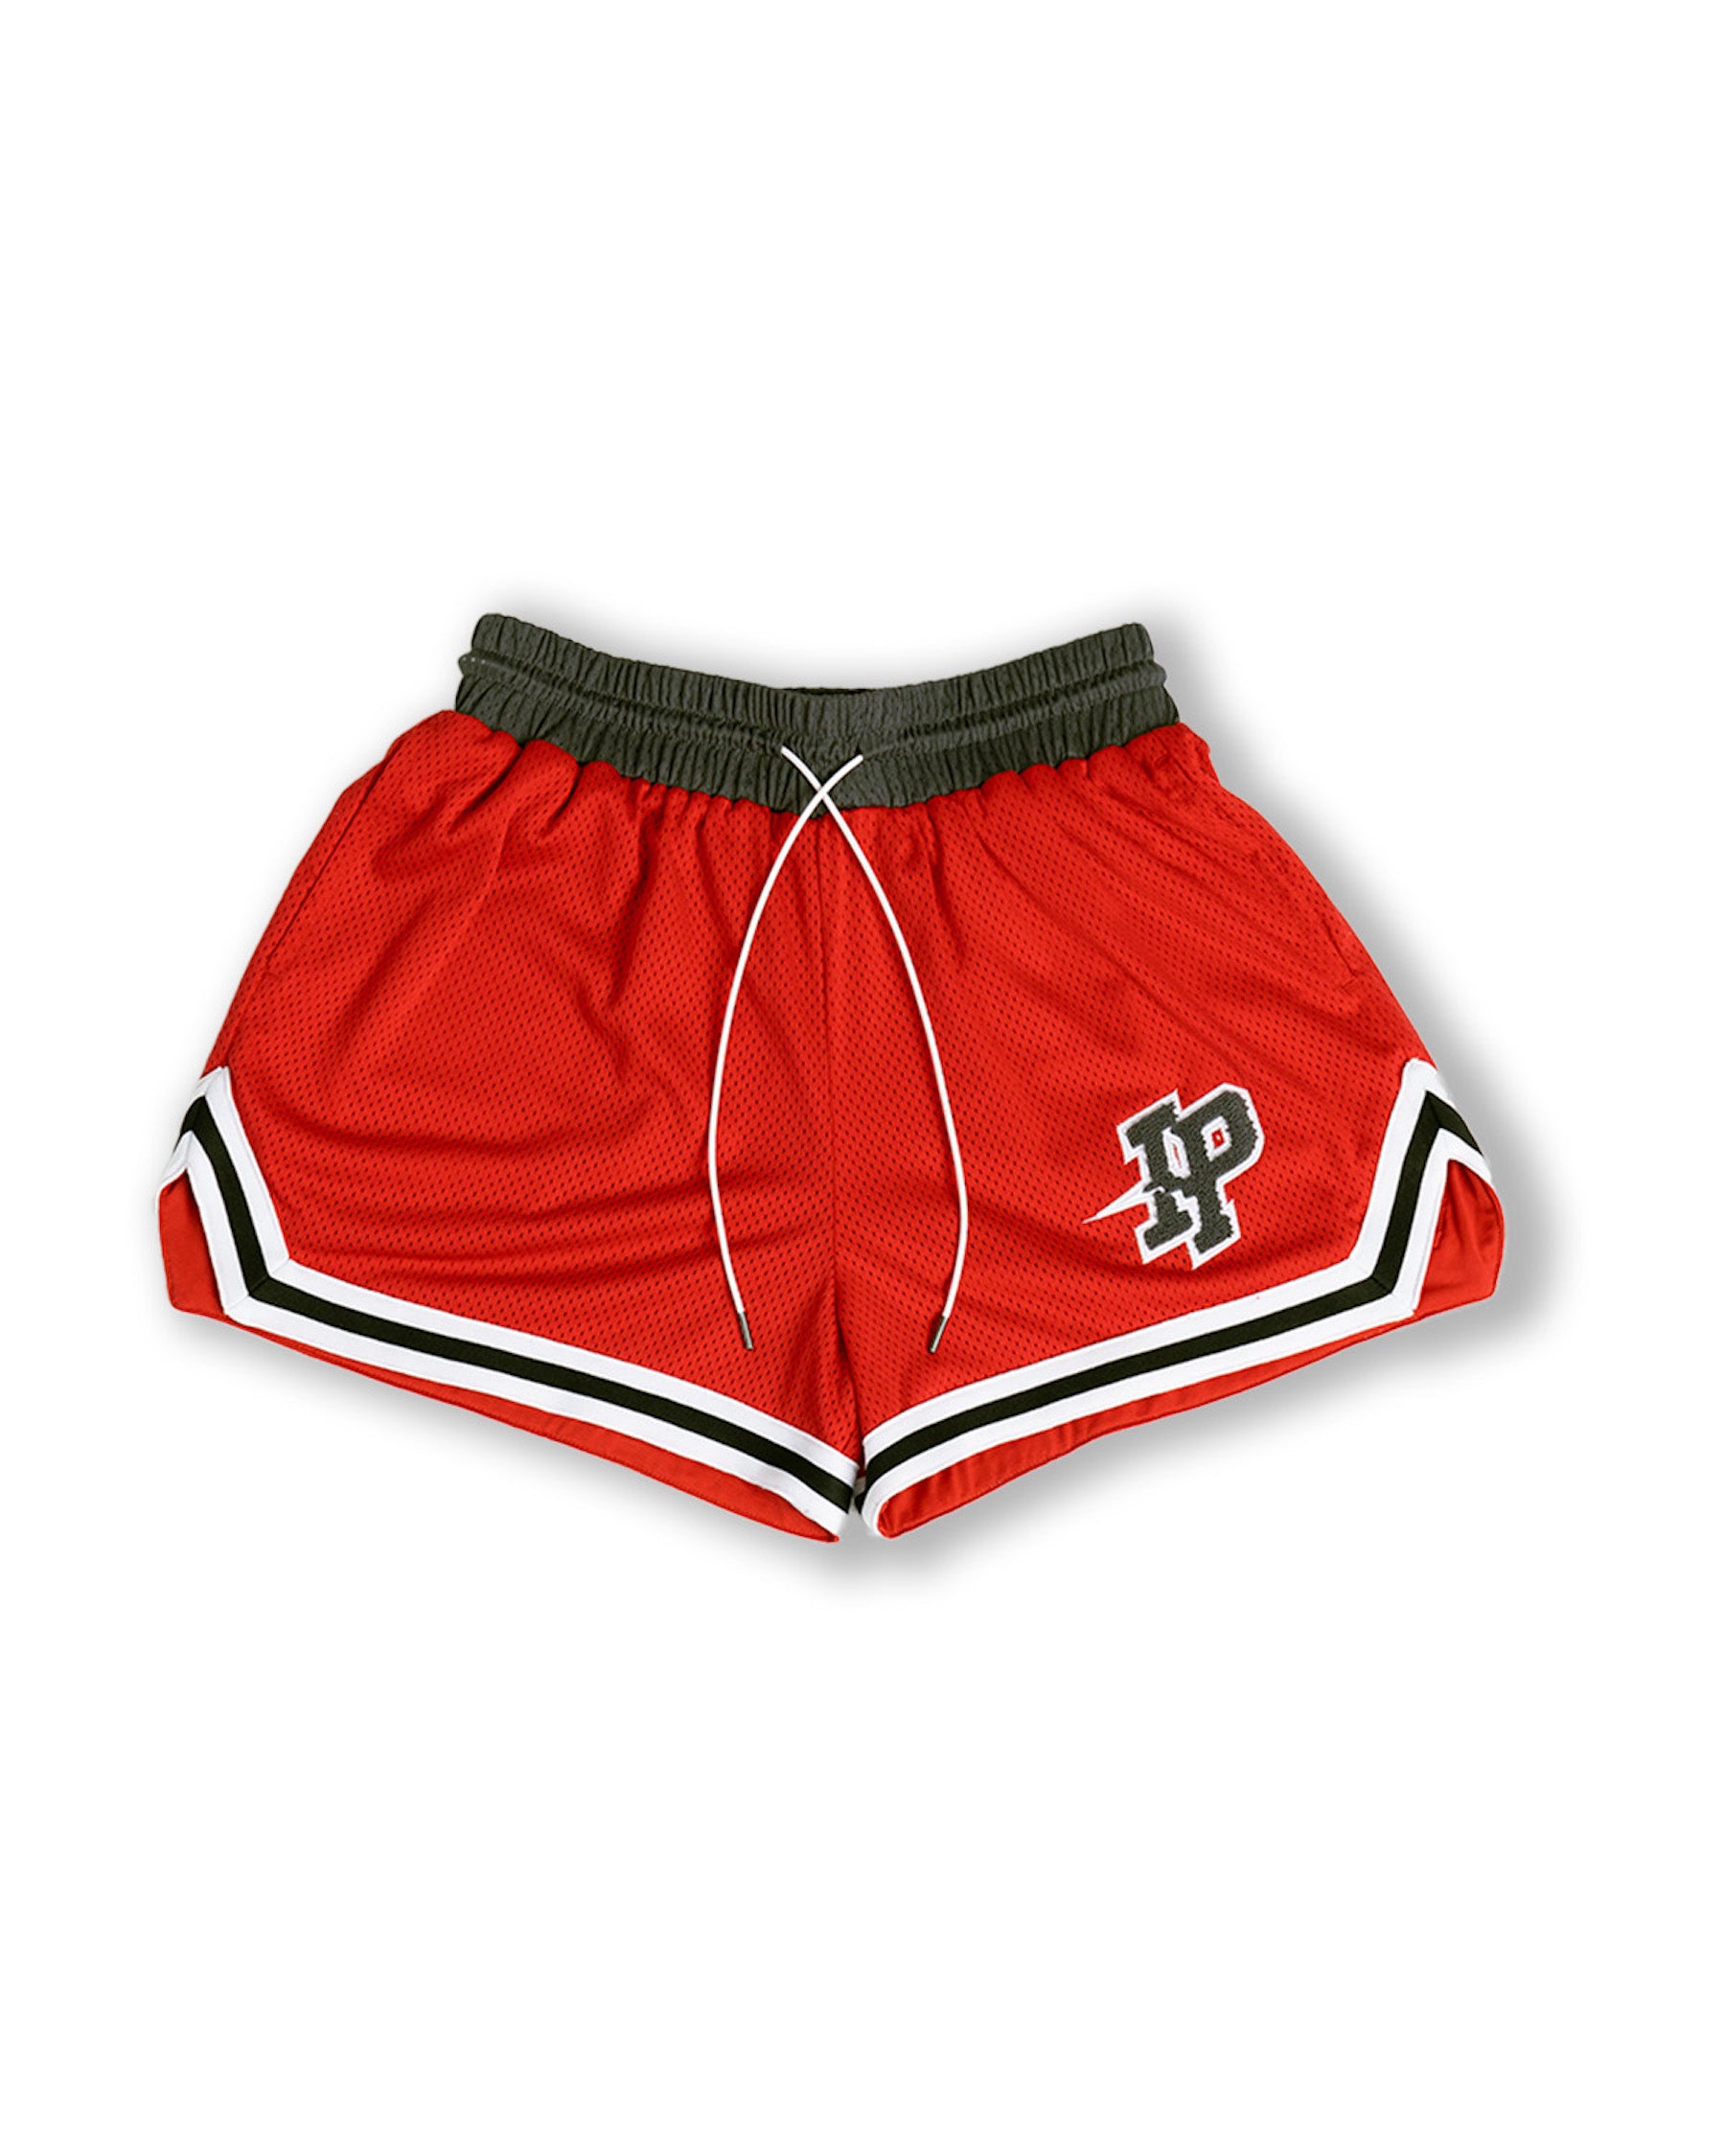 Women's League Mesh Shorts - Brick Red